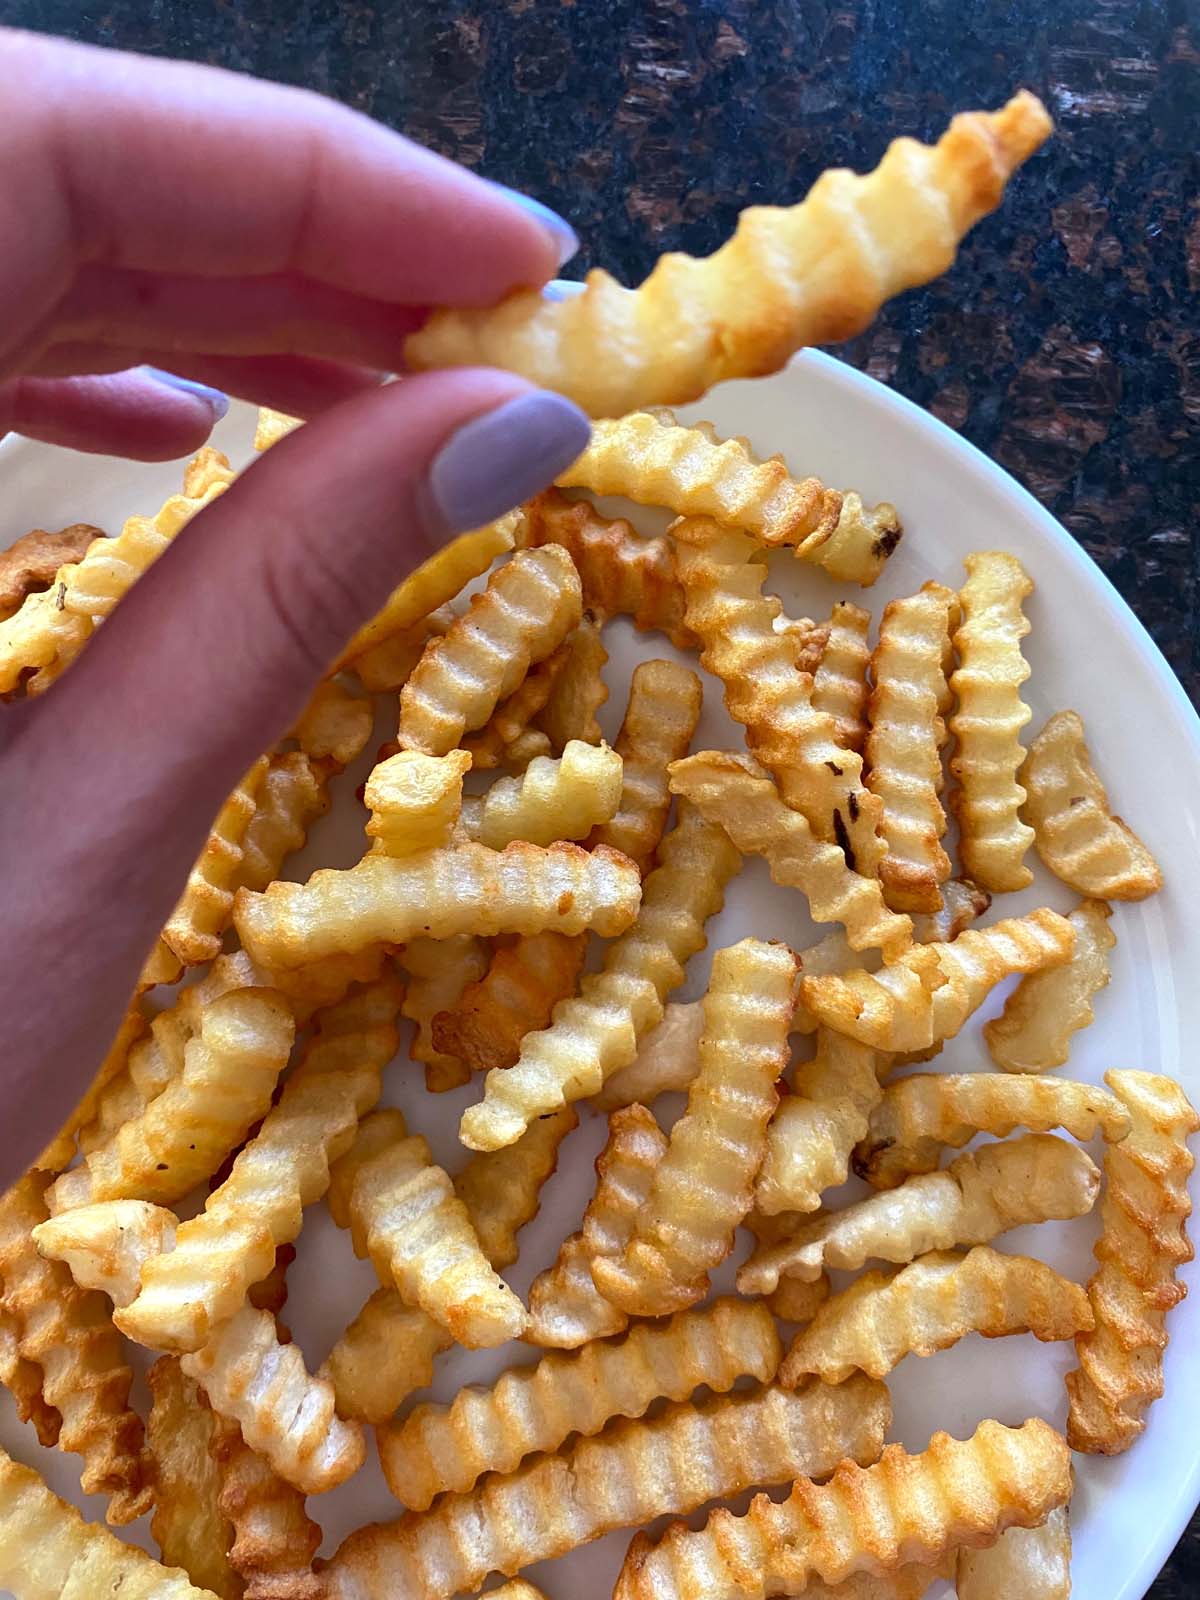 https://www.melaniecooks.com/wp-content/uploads/2022/05/Air-Fryer-Frozen-Crinkle-Fries-8.jpg